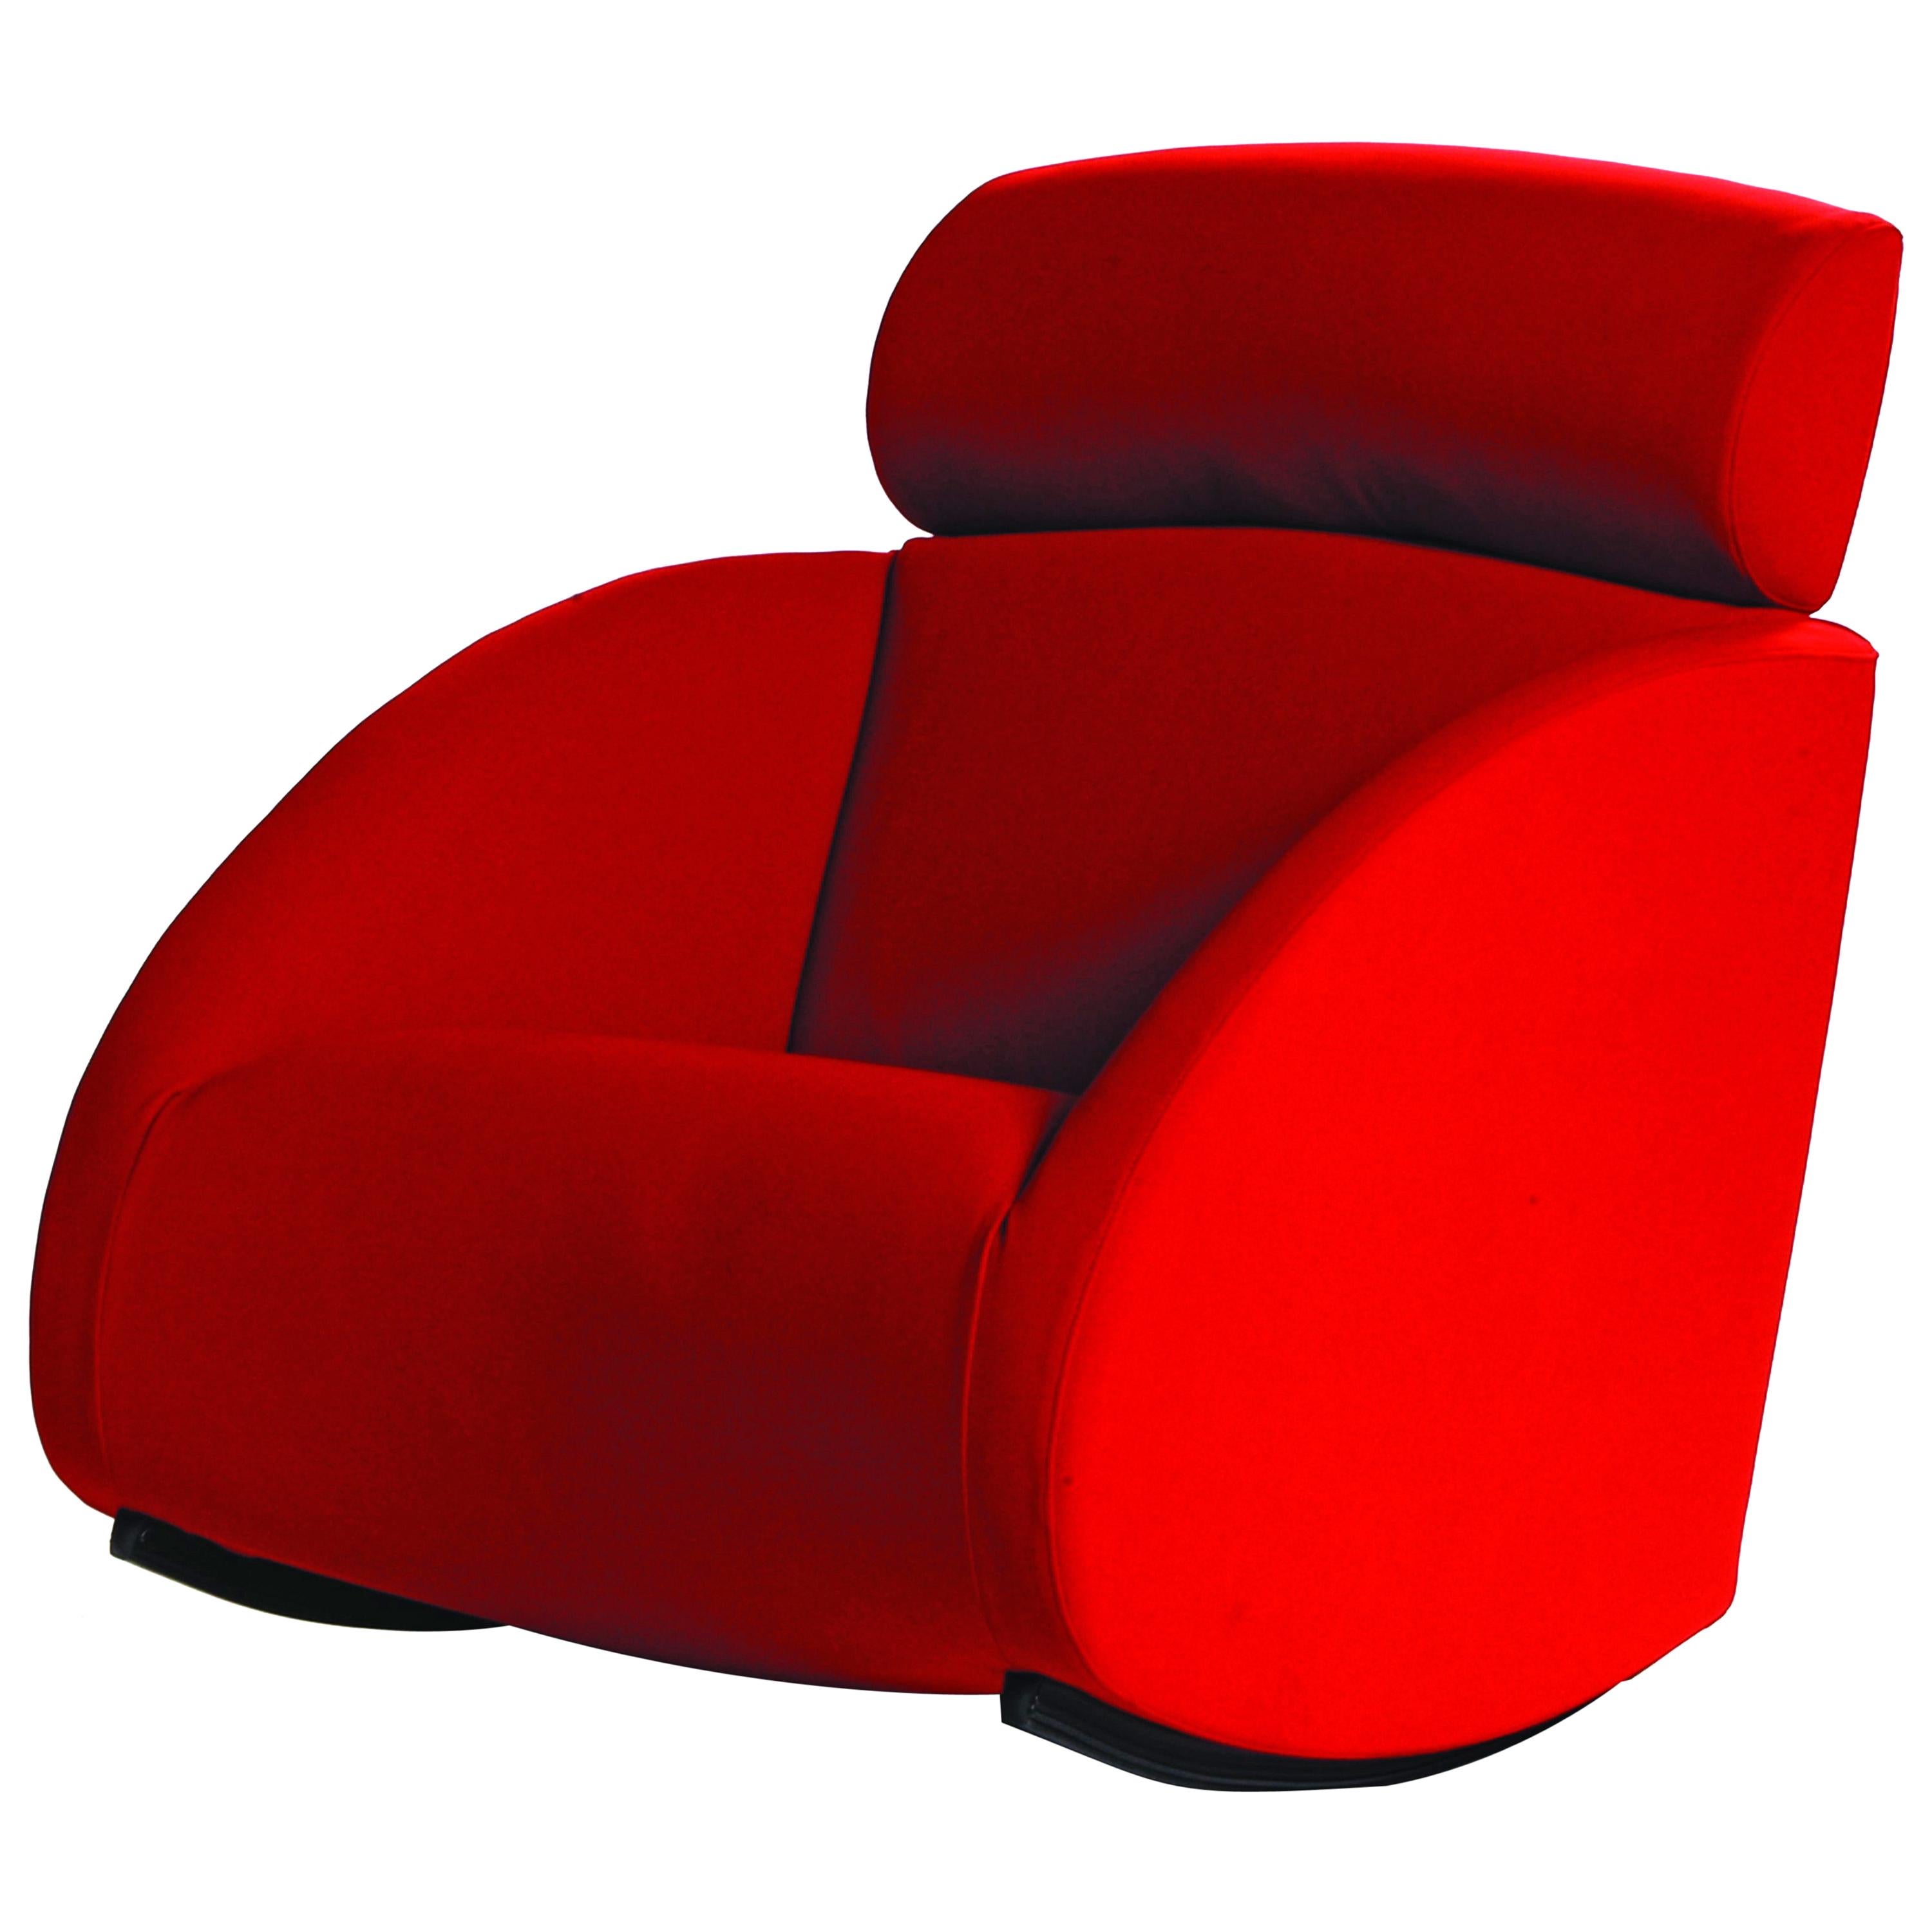 Baleri Italia Mama Armchair with headrest in Red by Denis Santachiara For Sale